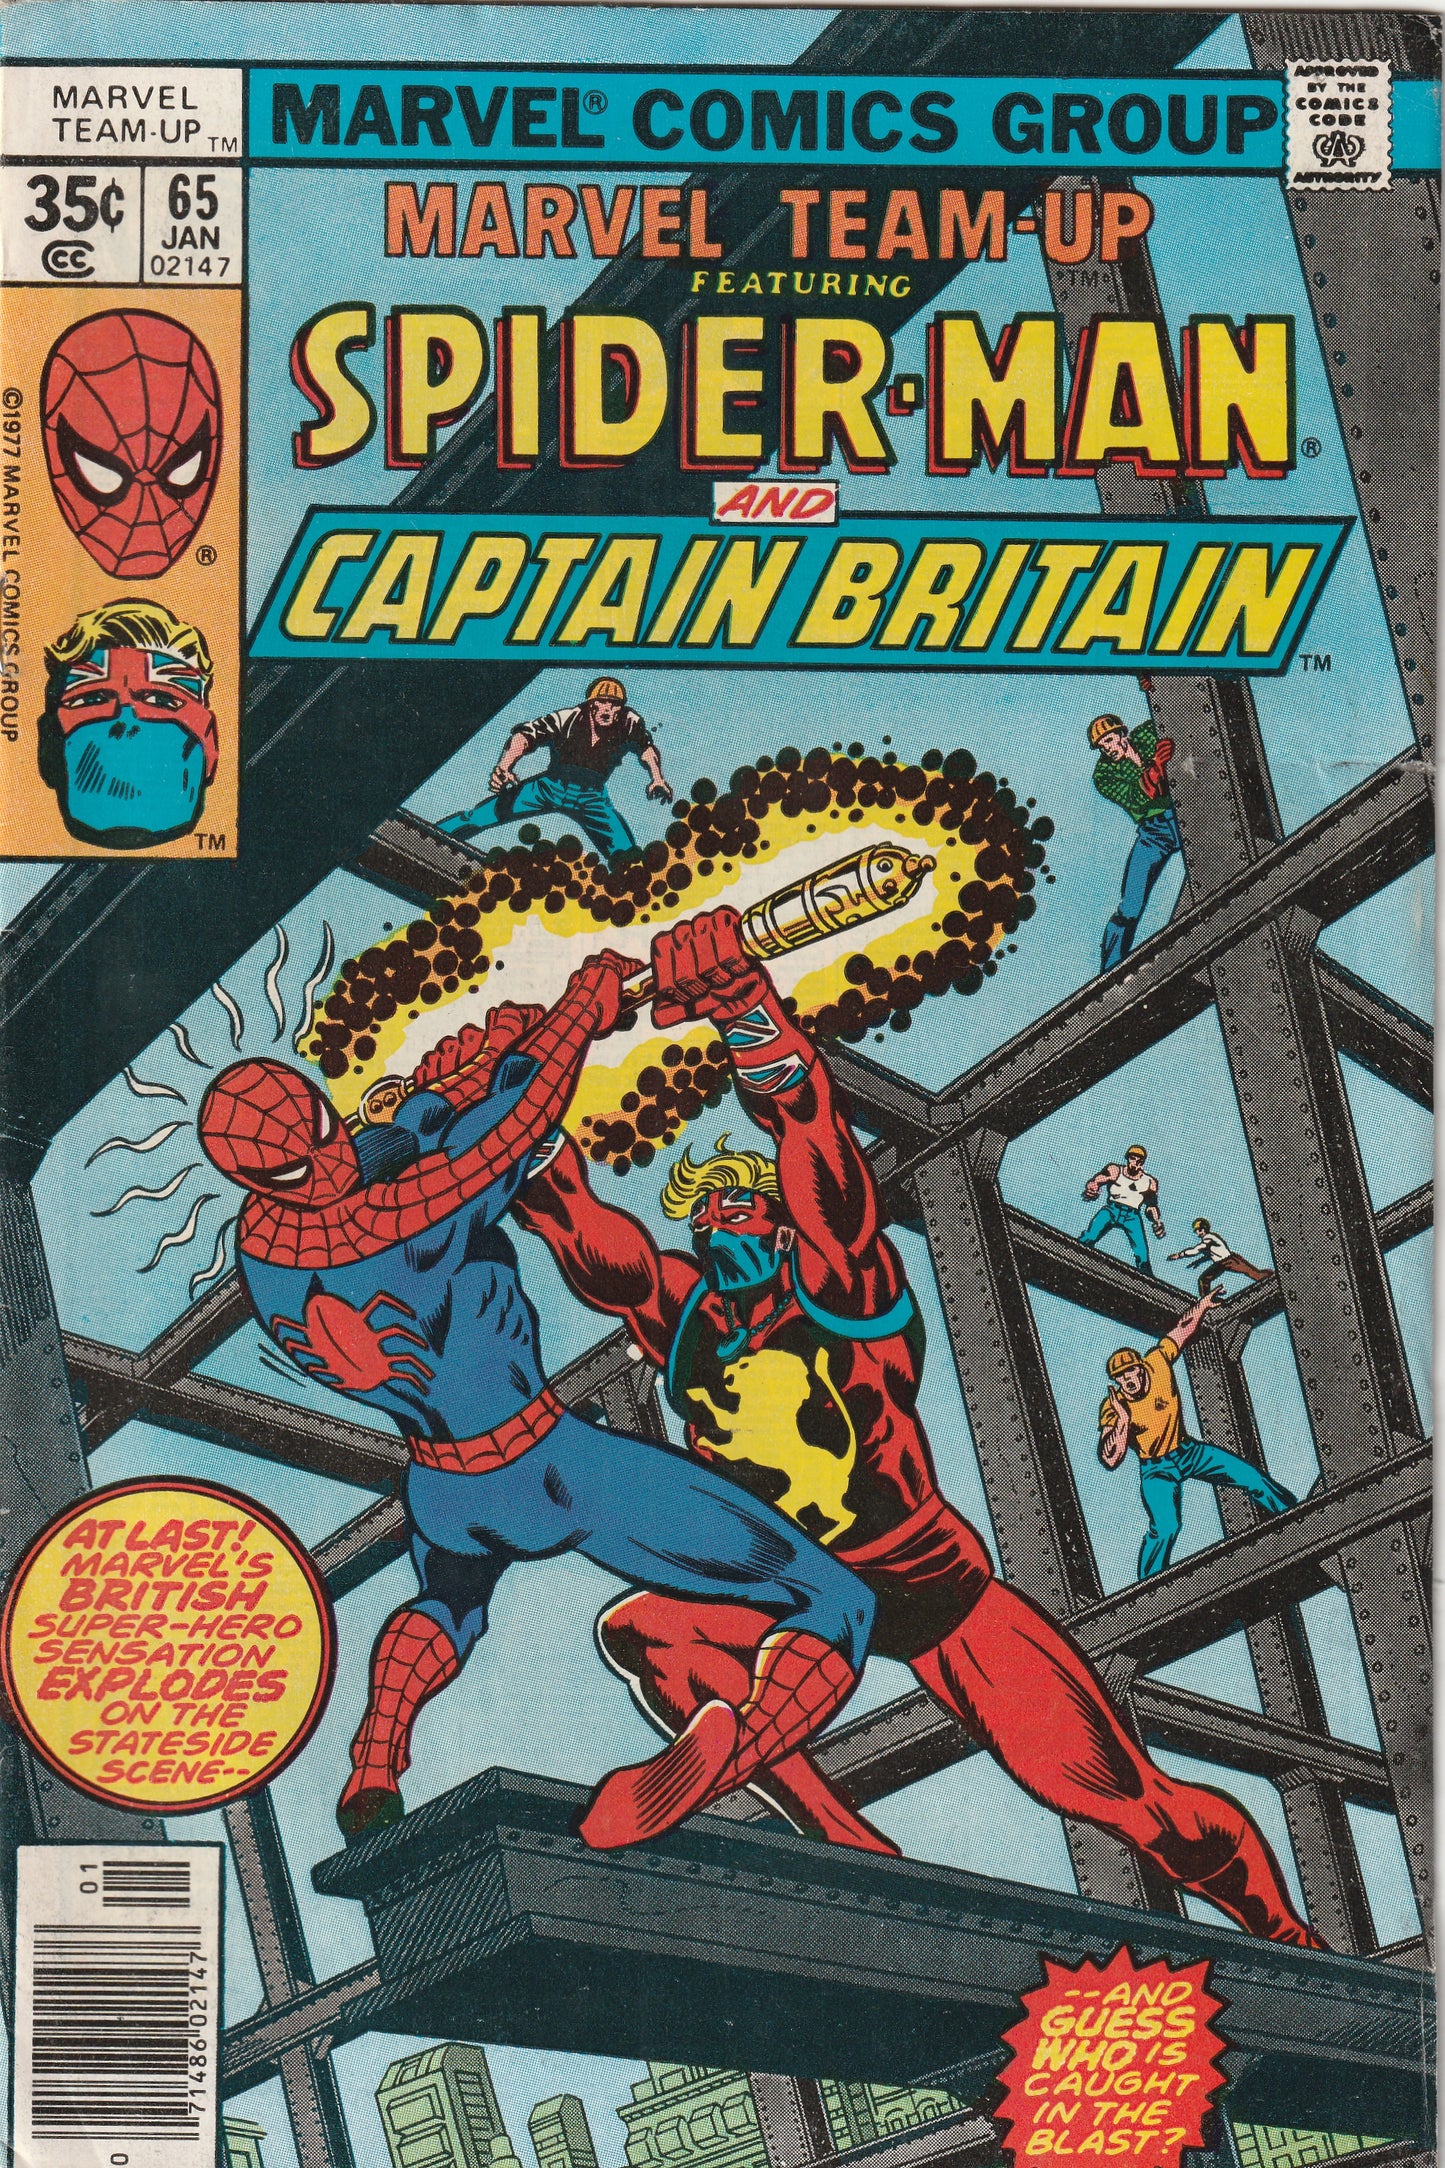 Marvel Team-Up #65 (1978) - Spider-Man & Captain Britain - 1st U.S. Appearance and Origin of Captain Britain